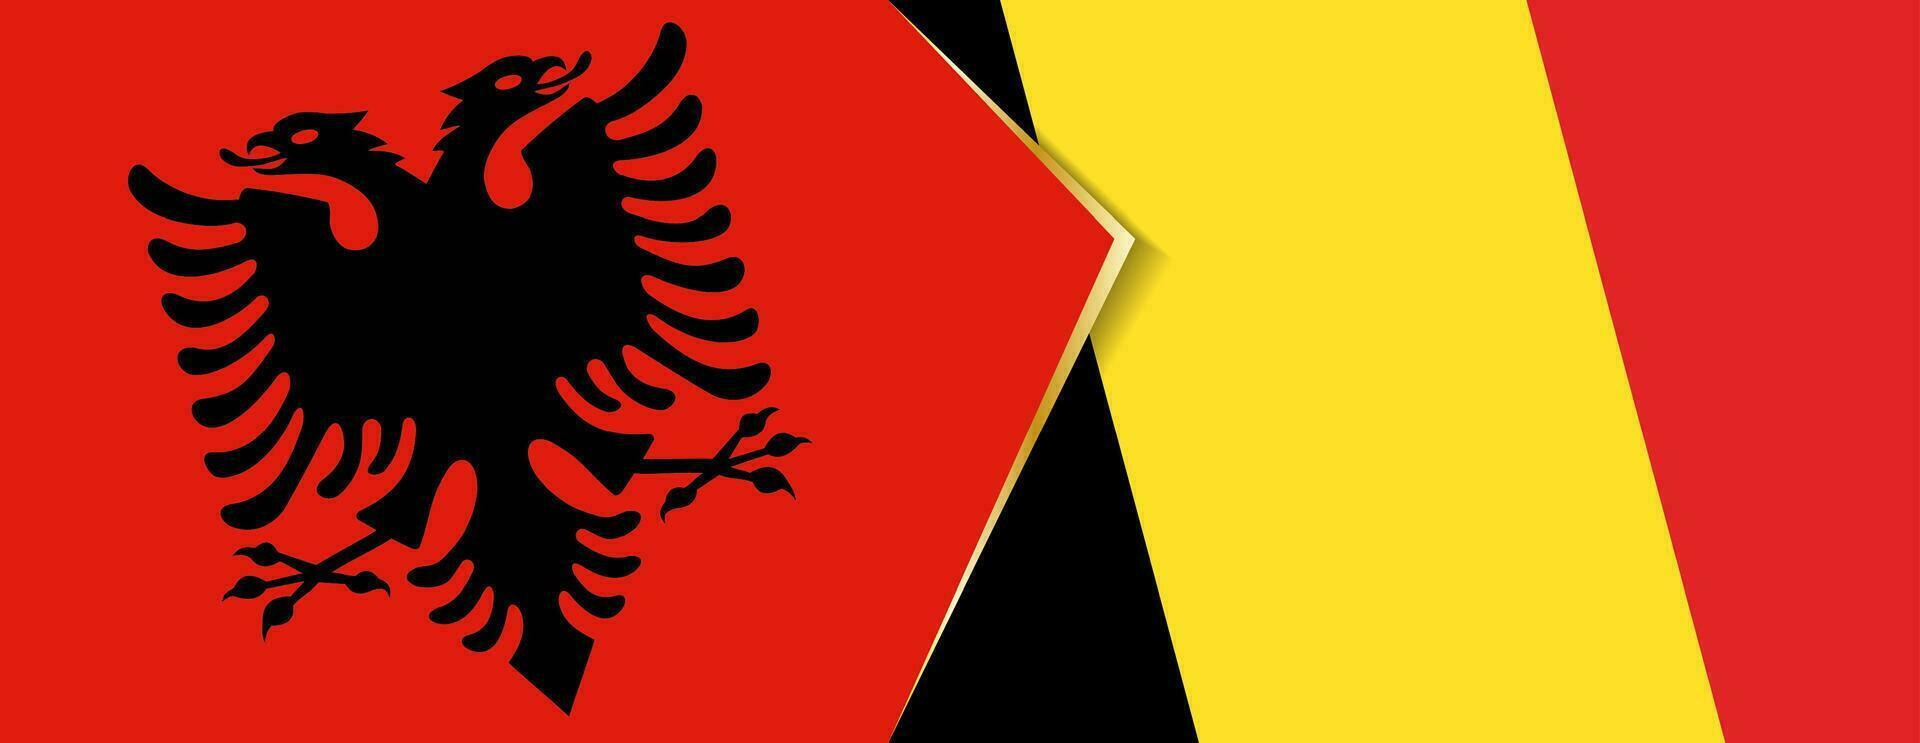 Albânia e Bélgica bandeiras, dois vetor bandeiras.